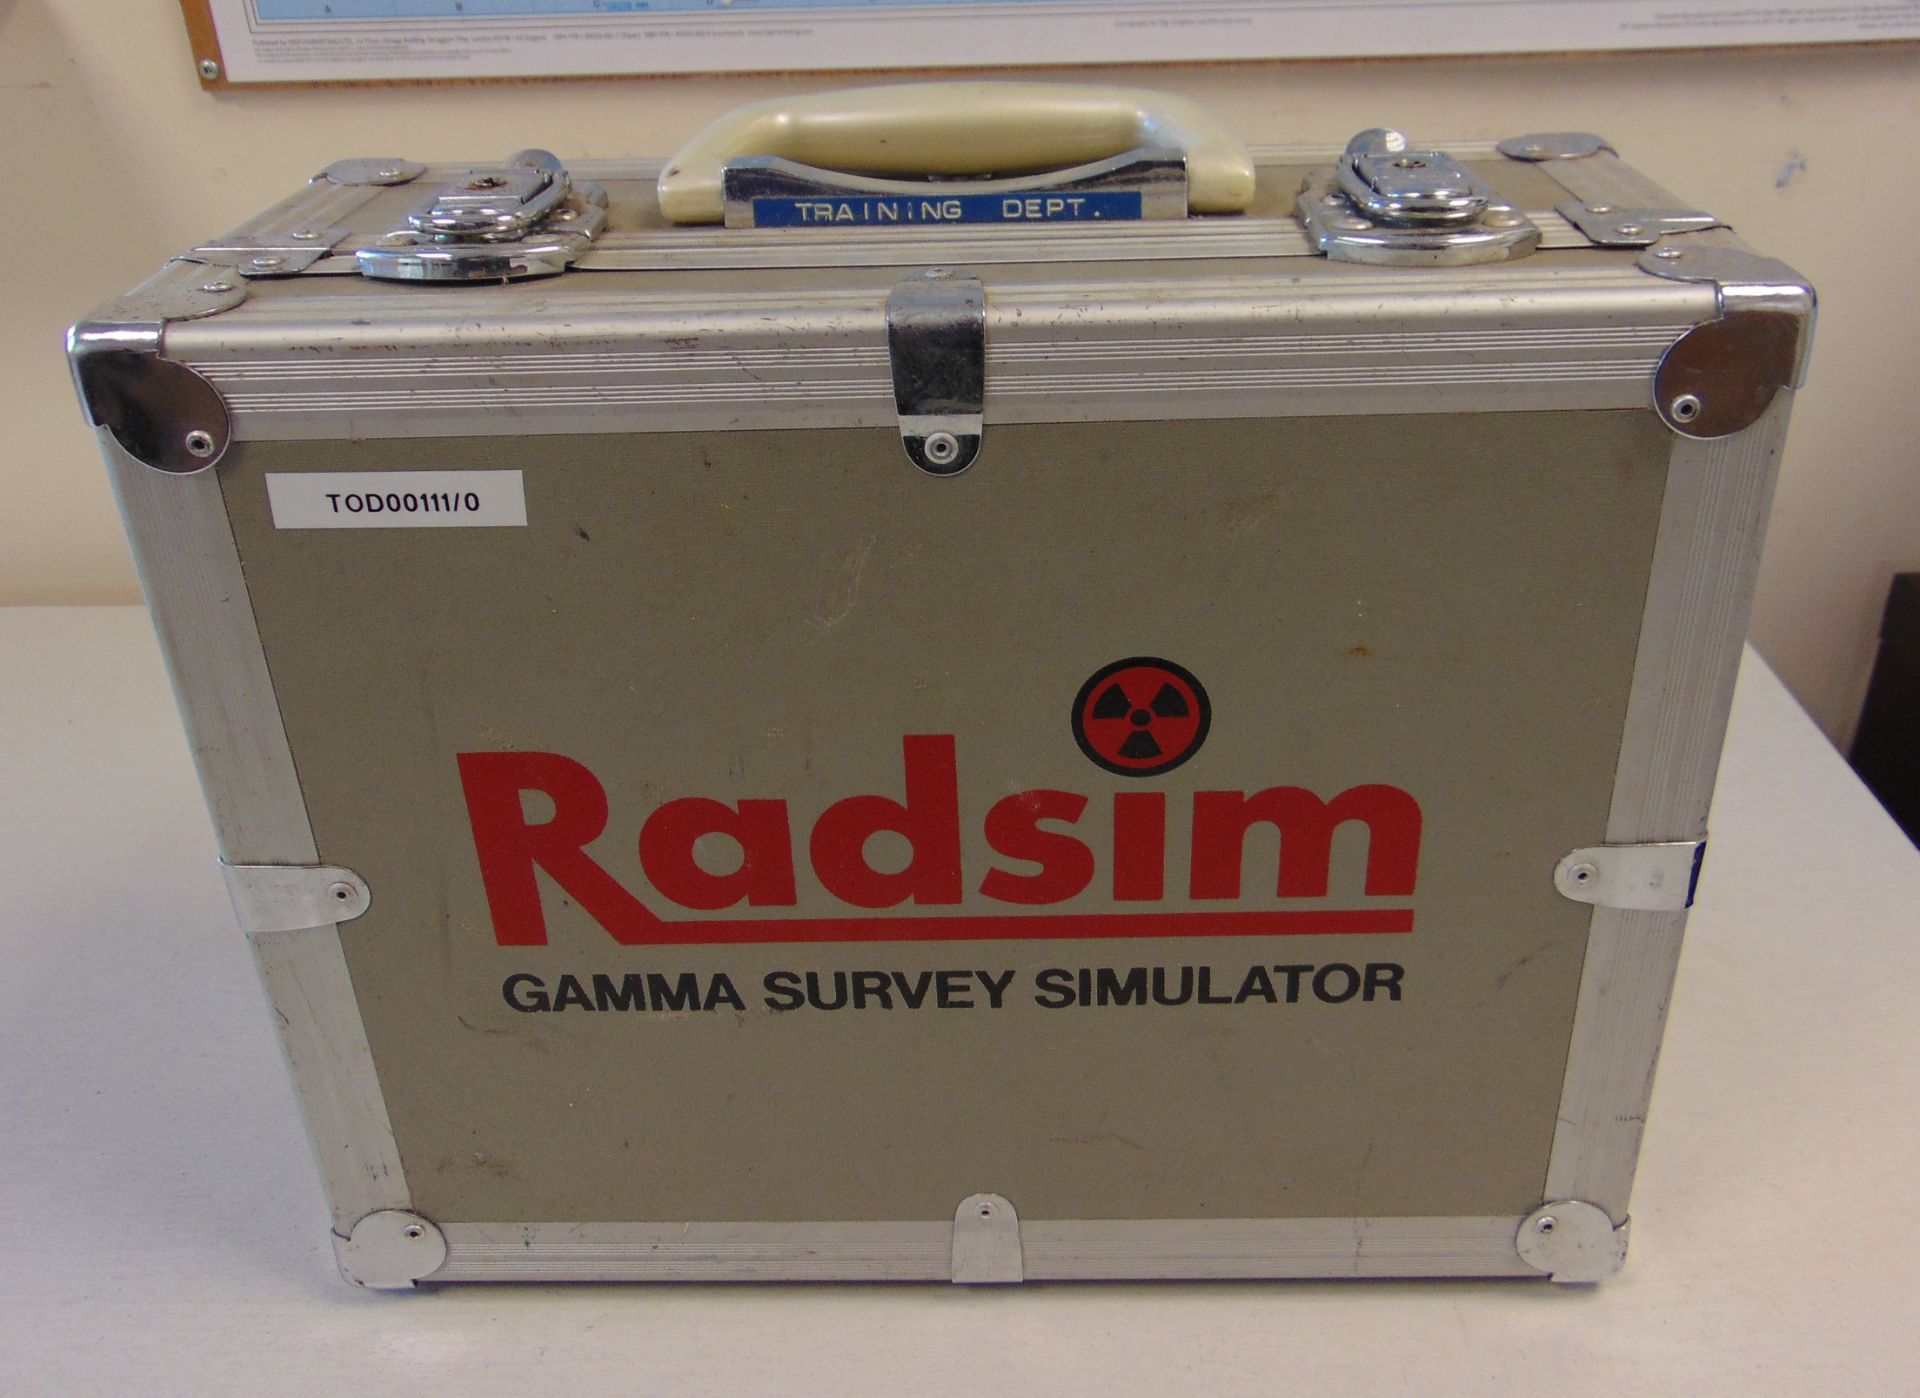 Radsim Gamma Survey Simulator - Radiation Detection Training Unit - Image 2 of 12